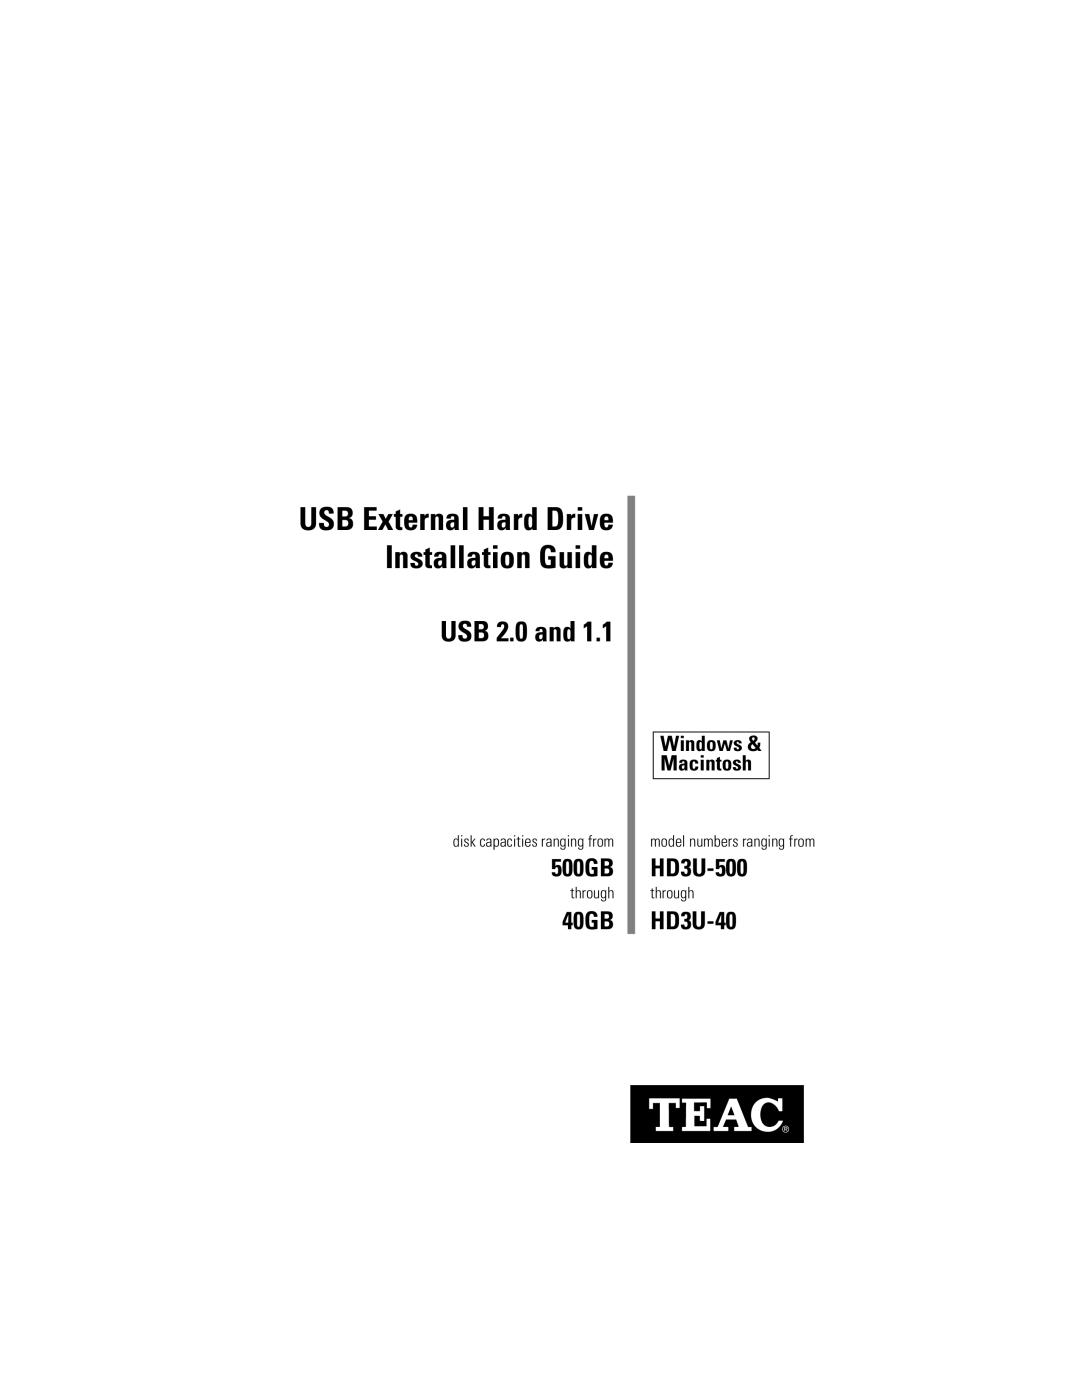 EDGE Tech HD3U-40 manual 500GB, 40GB, HD3U-500, USB 2.0 and, USB External Hard Drive Installation Guide, Windows Macintosh 